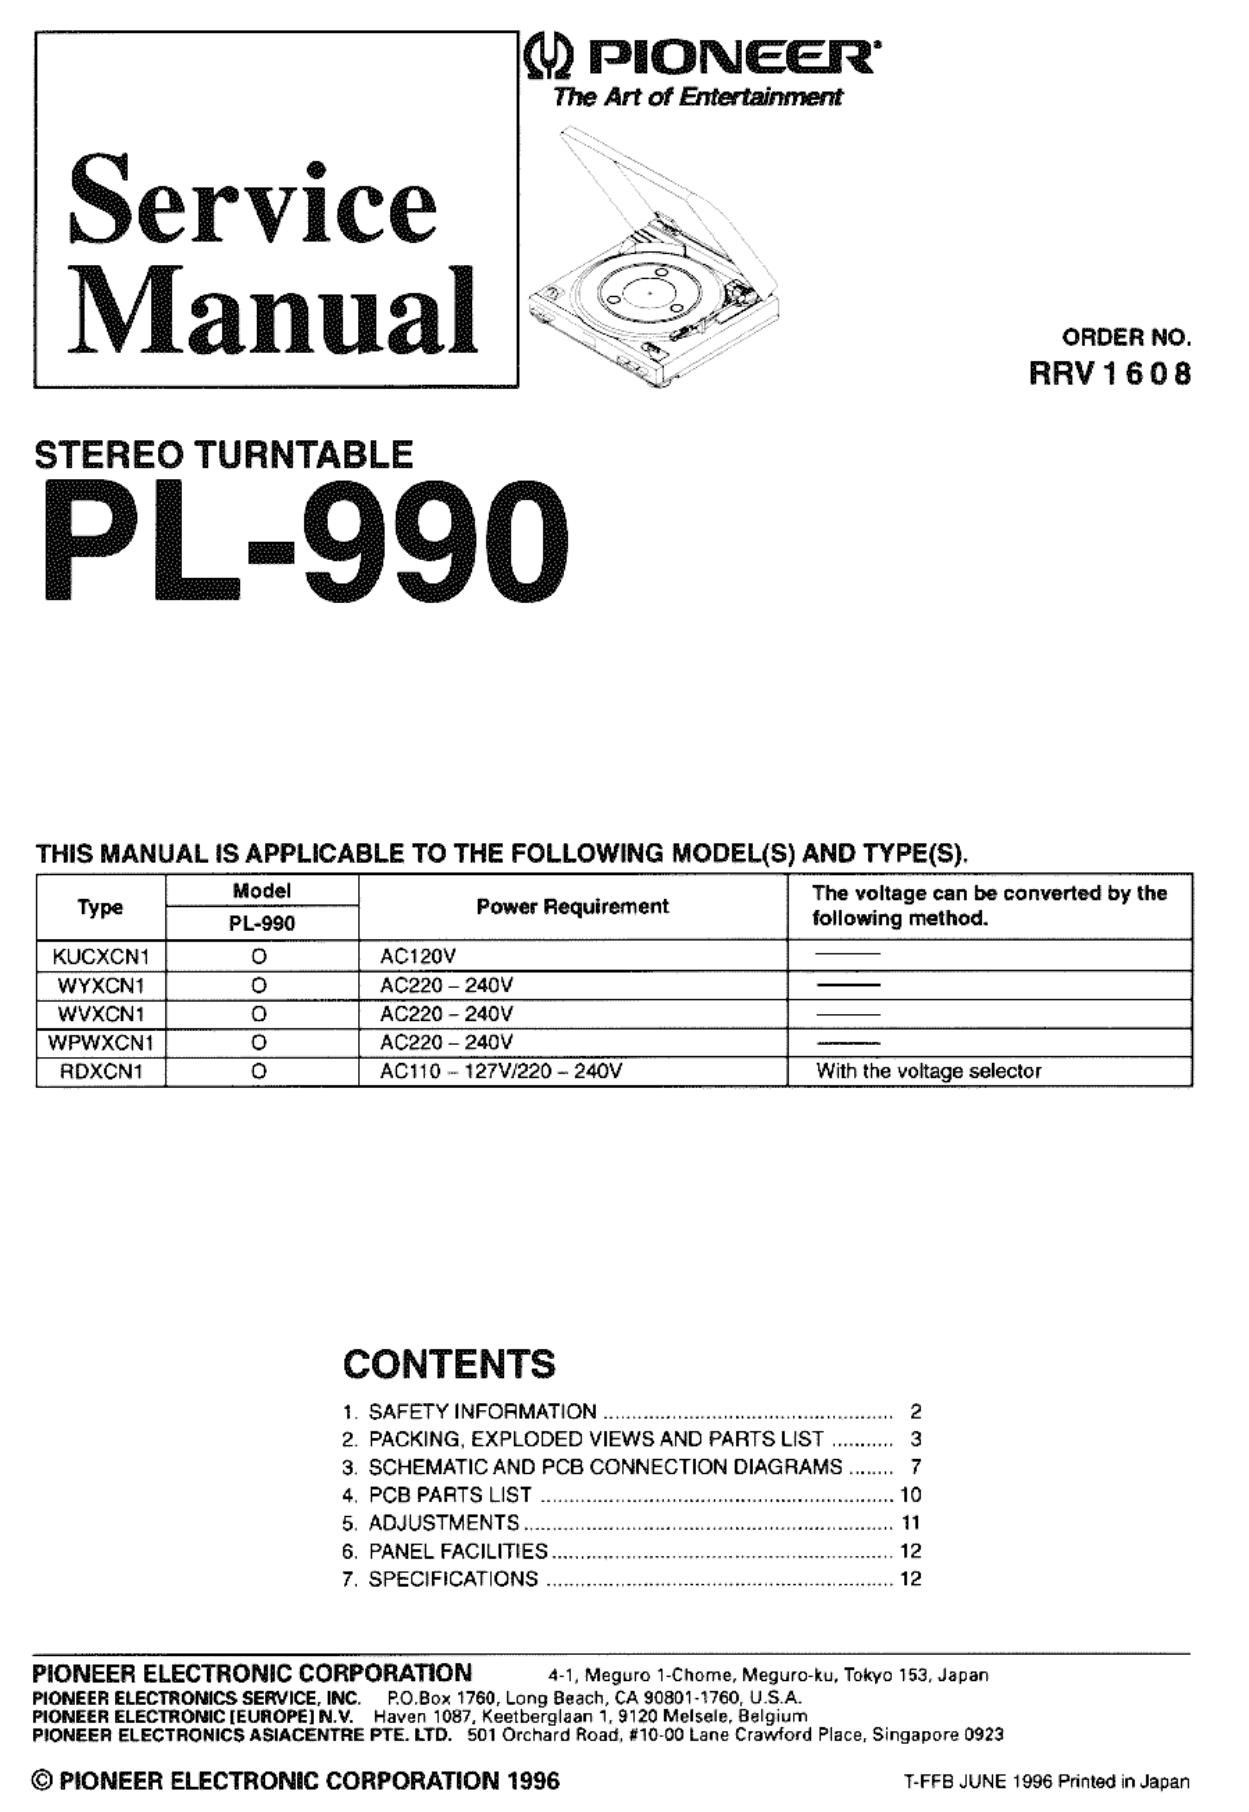 pioneer pl 990 service manual